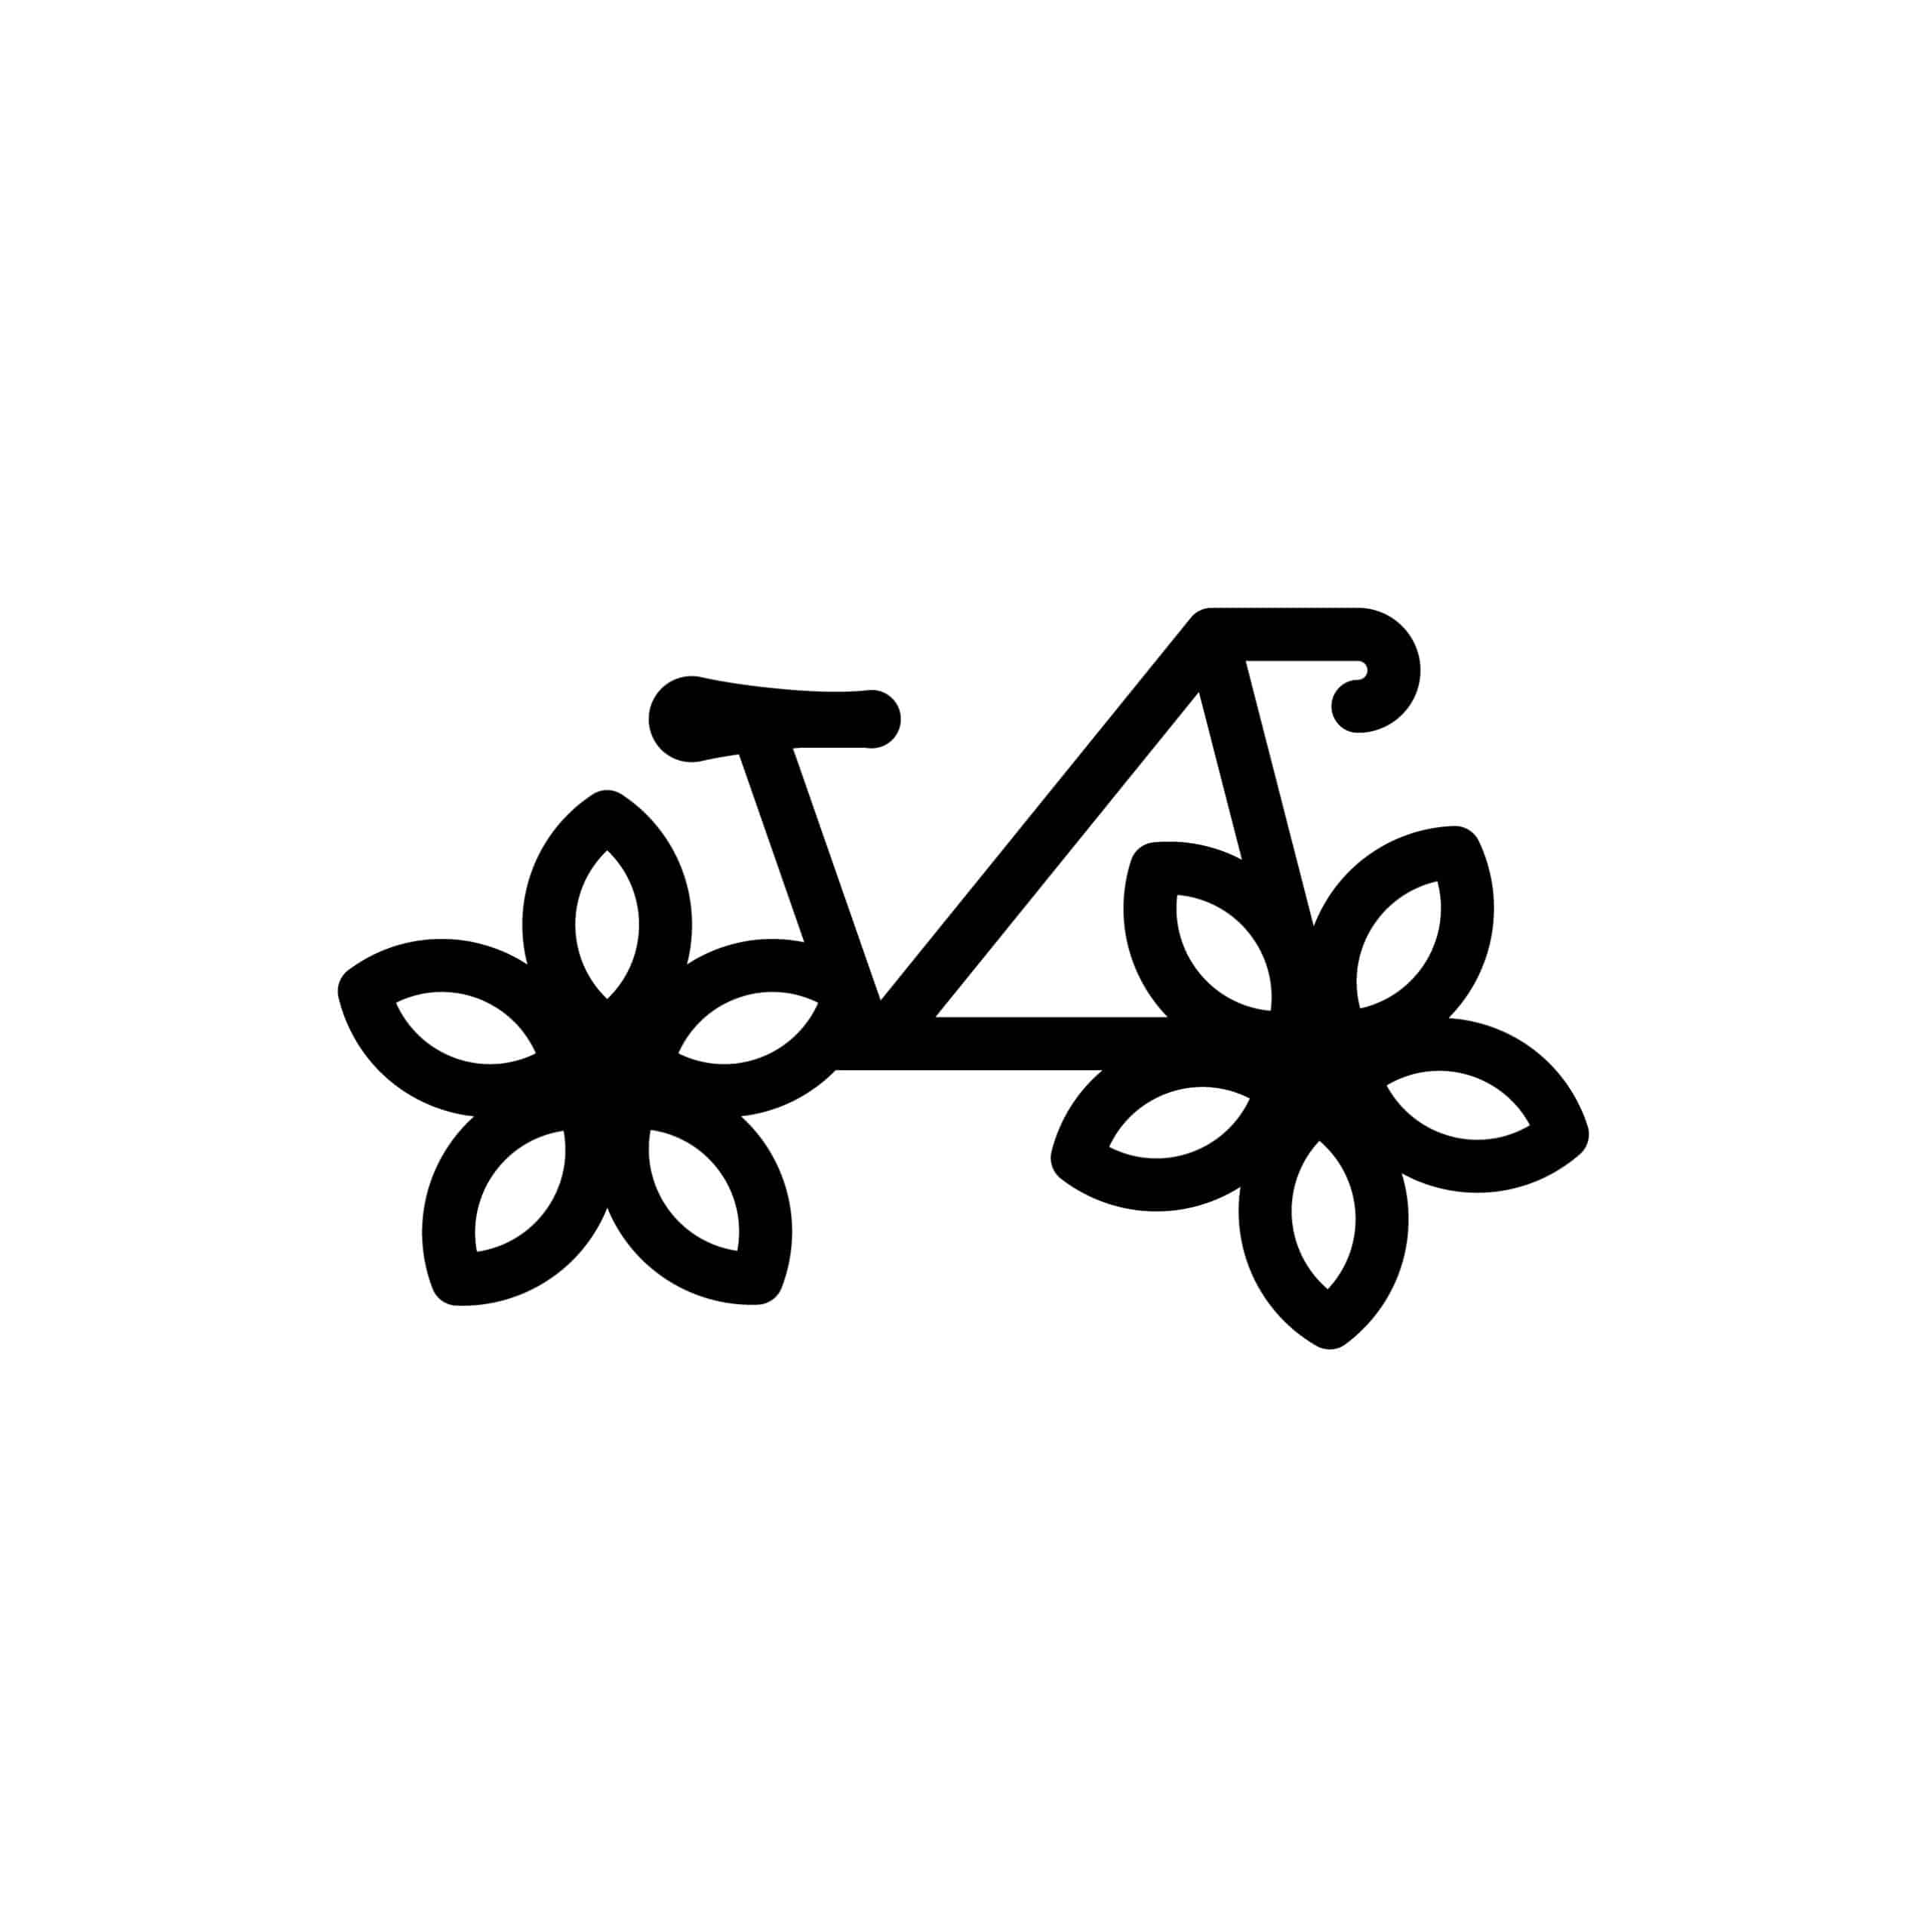 Flower Petal Bike Logo with retro 60's vibe by Stellen Design Branding Agency in Los Angeles California specializing in Logo Design